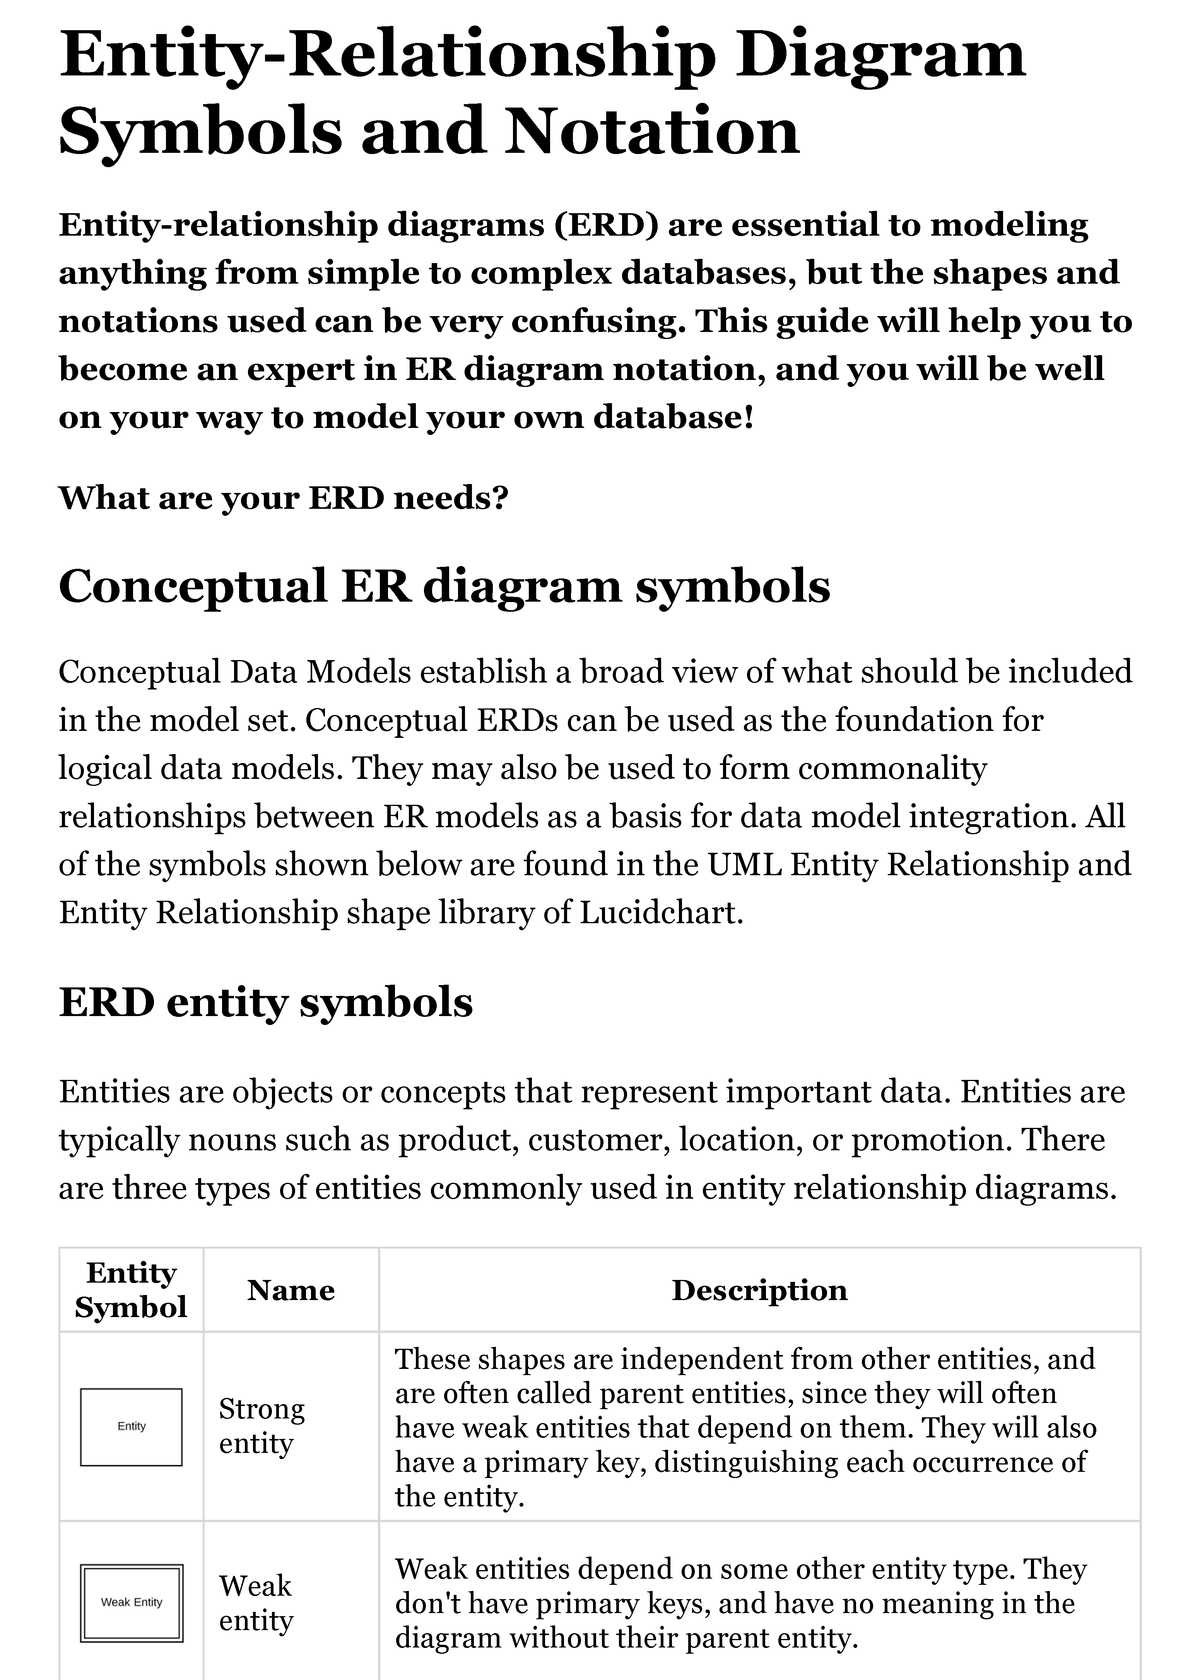 Entity-Relationship Diagram Symbols And Notation Lucidchart in Erd Relationship Symbols